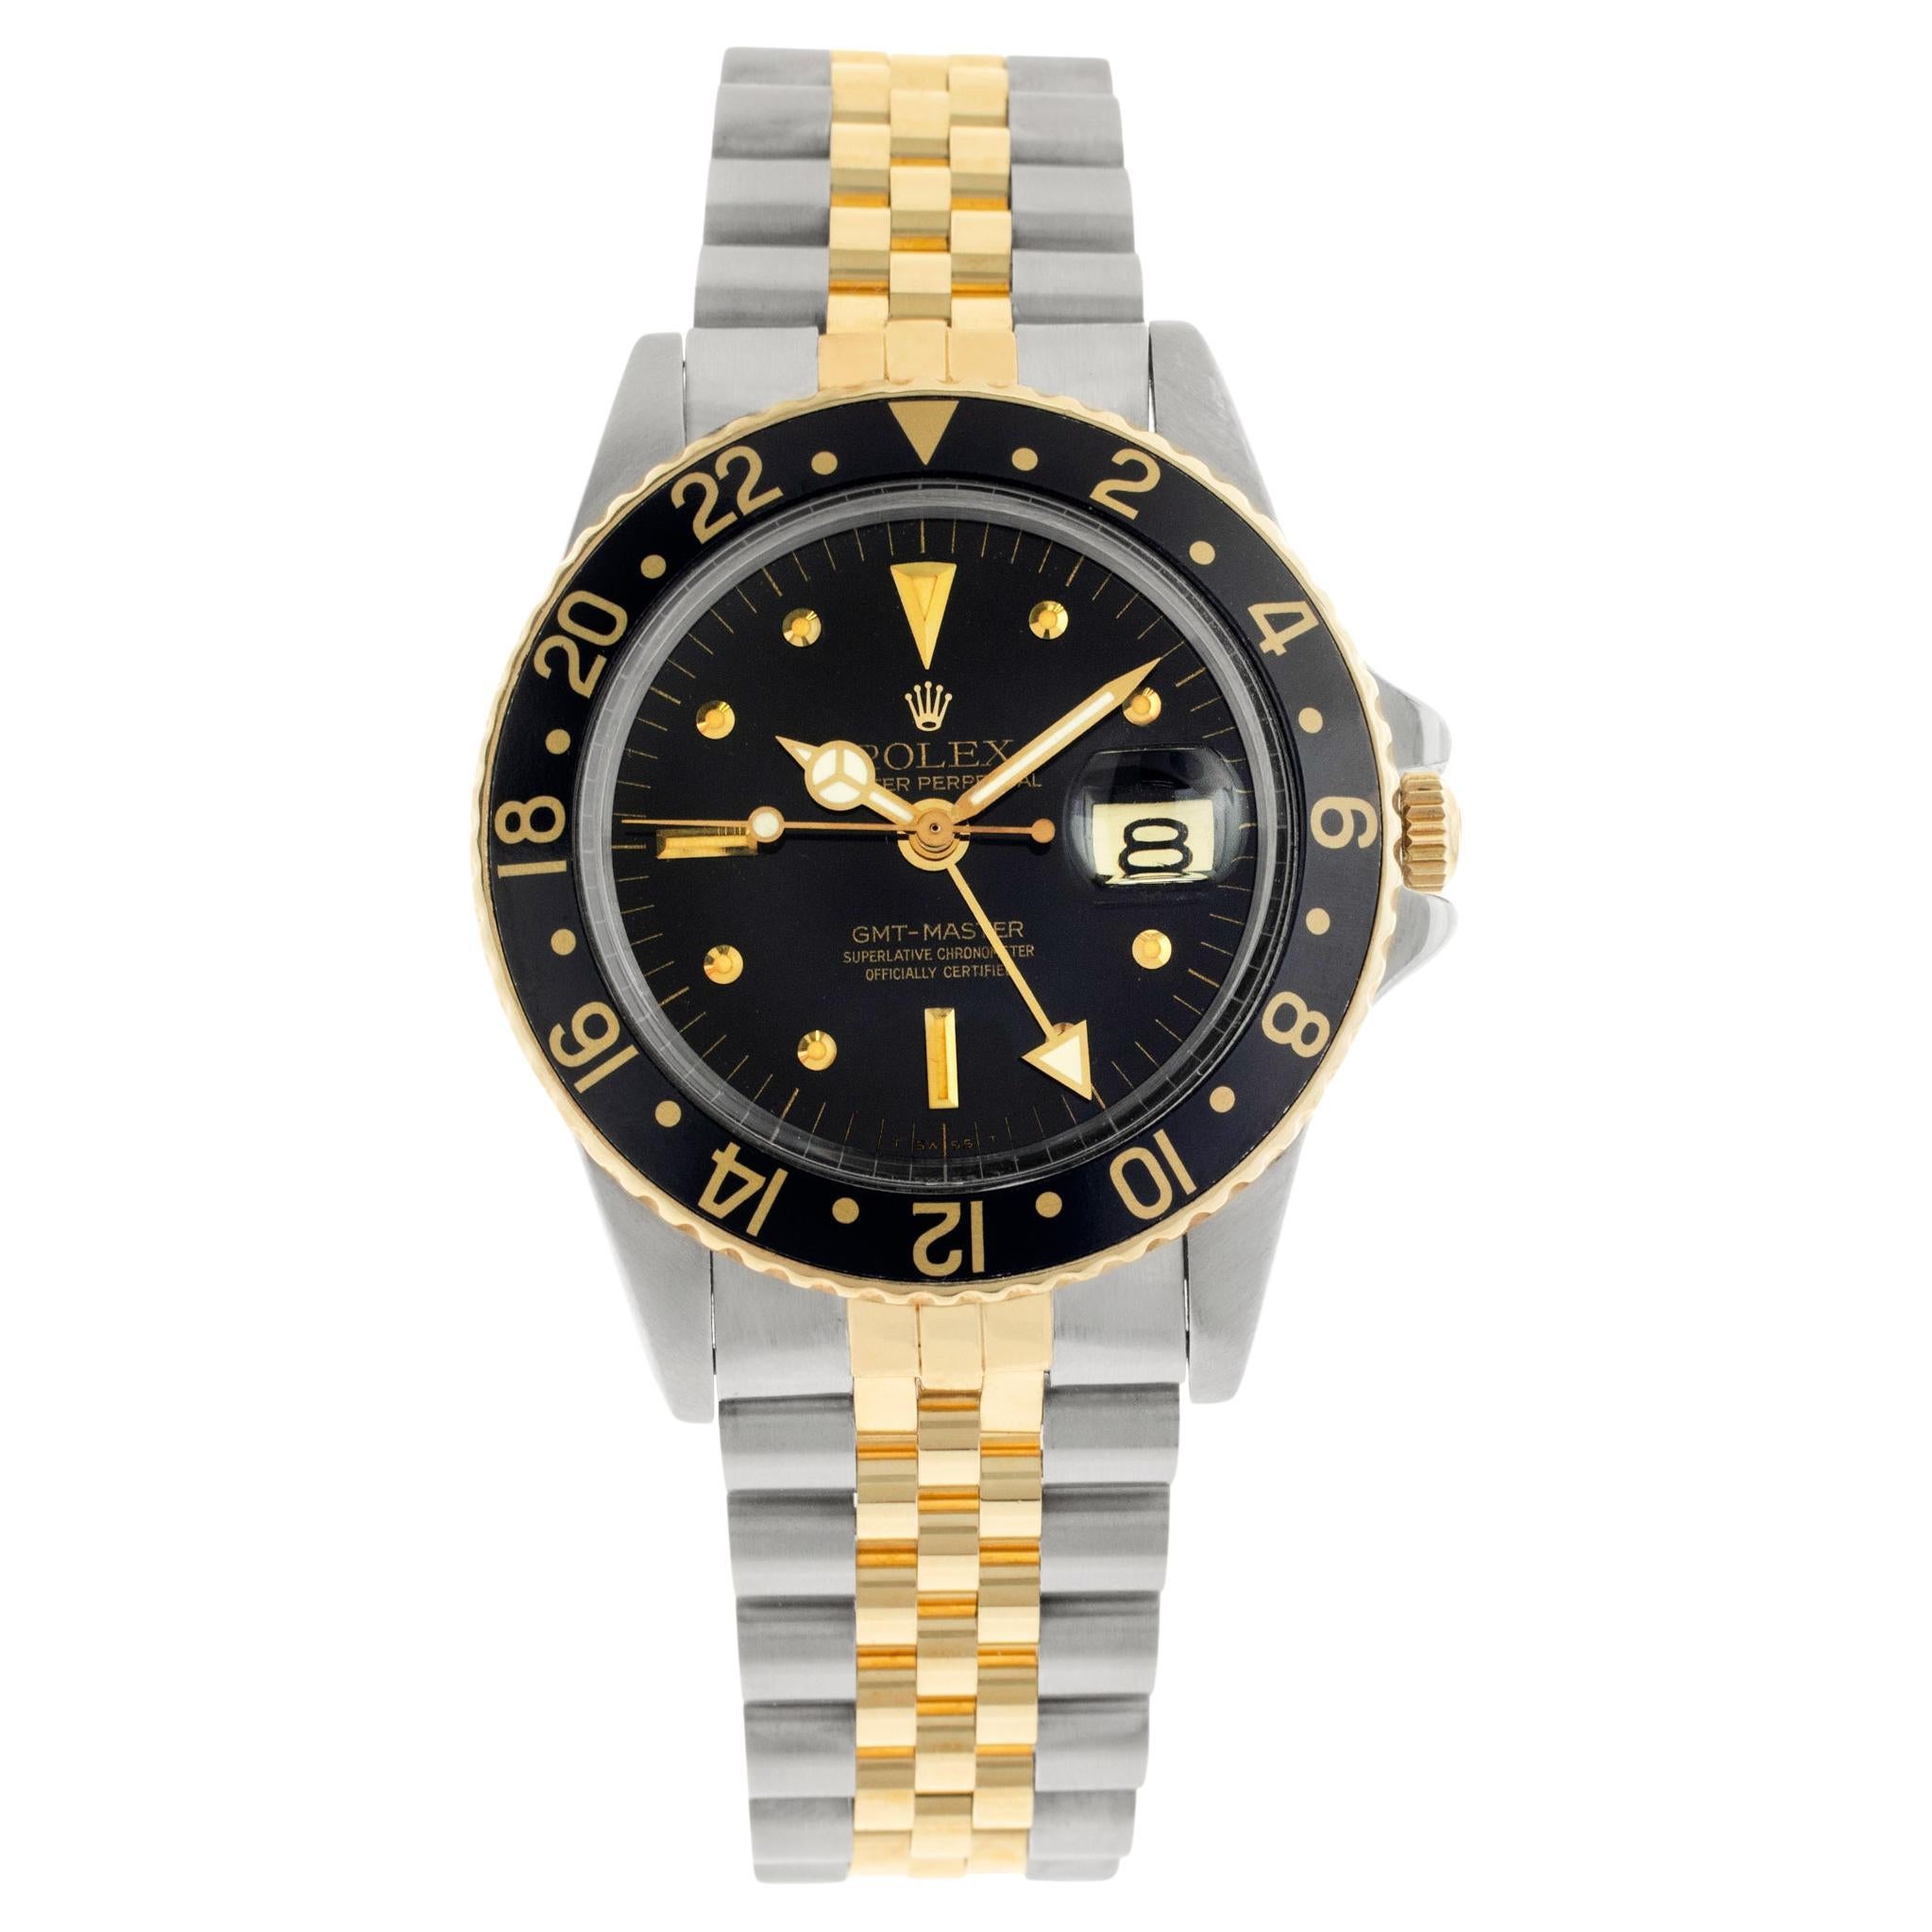 Rolex GMT-Master 1675 in stainless steel 40mm auto watch